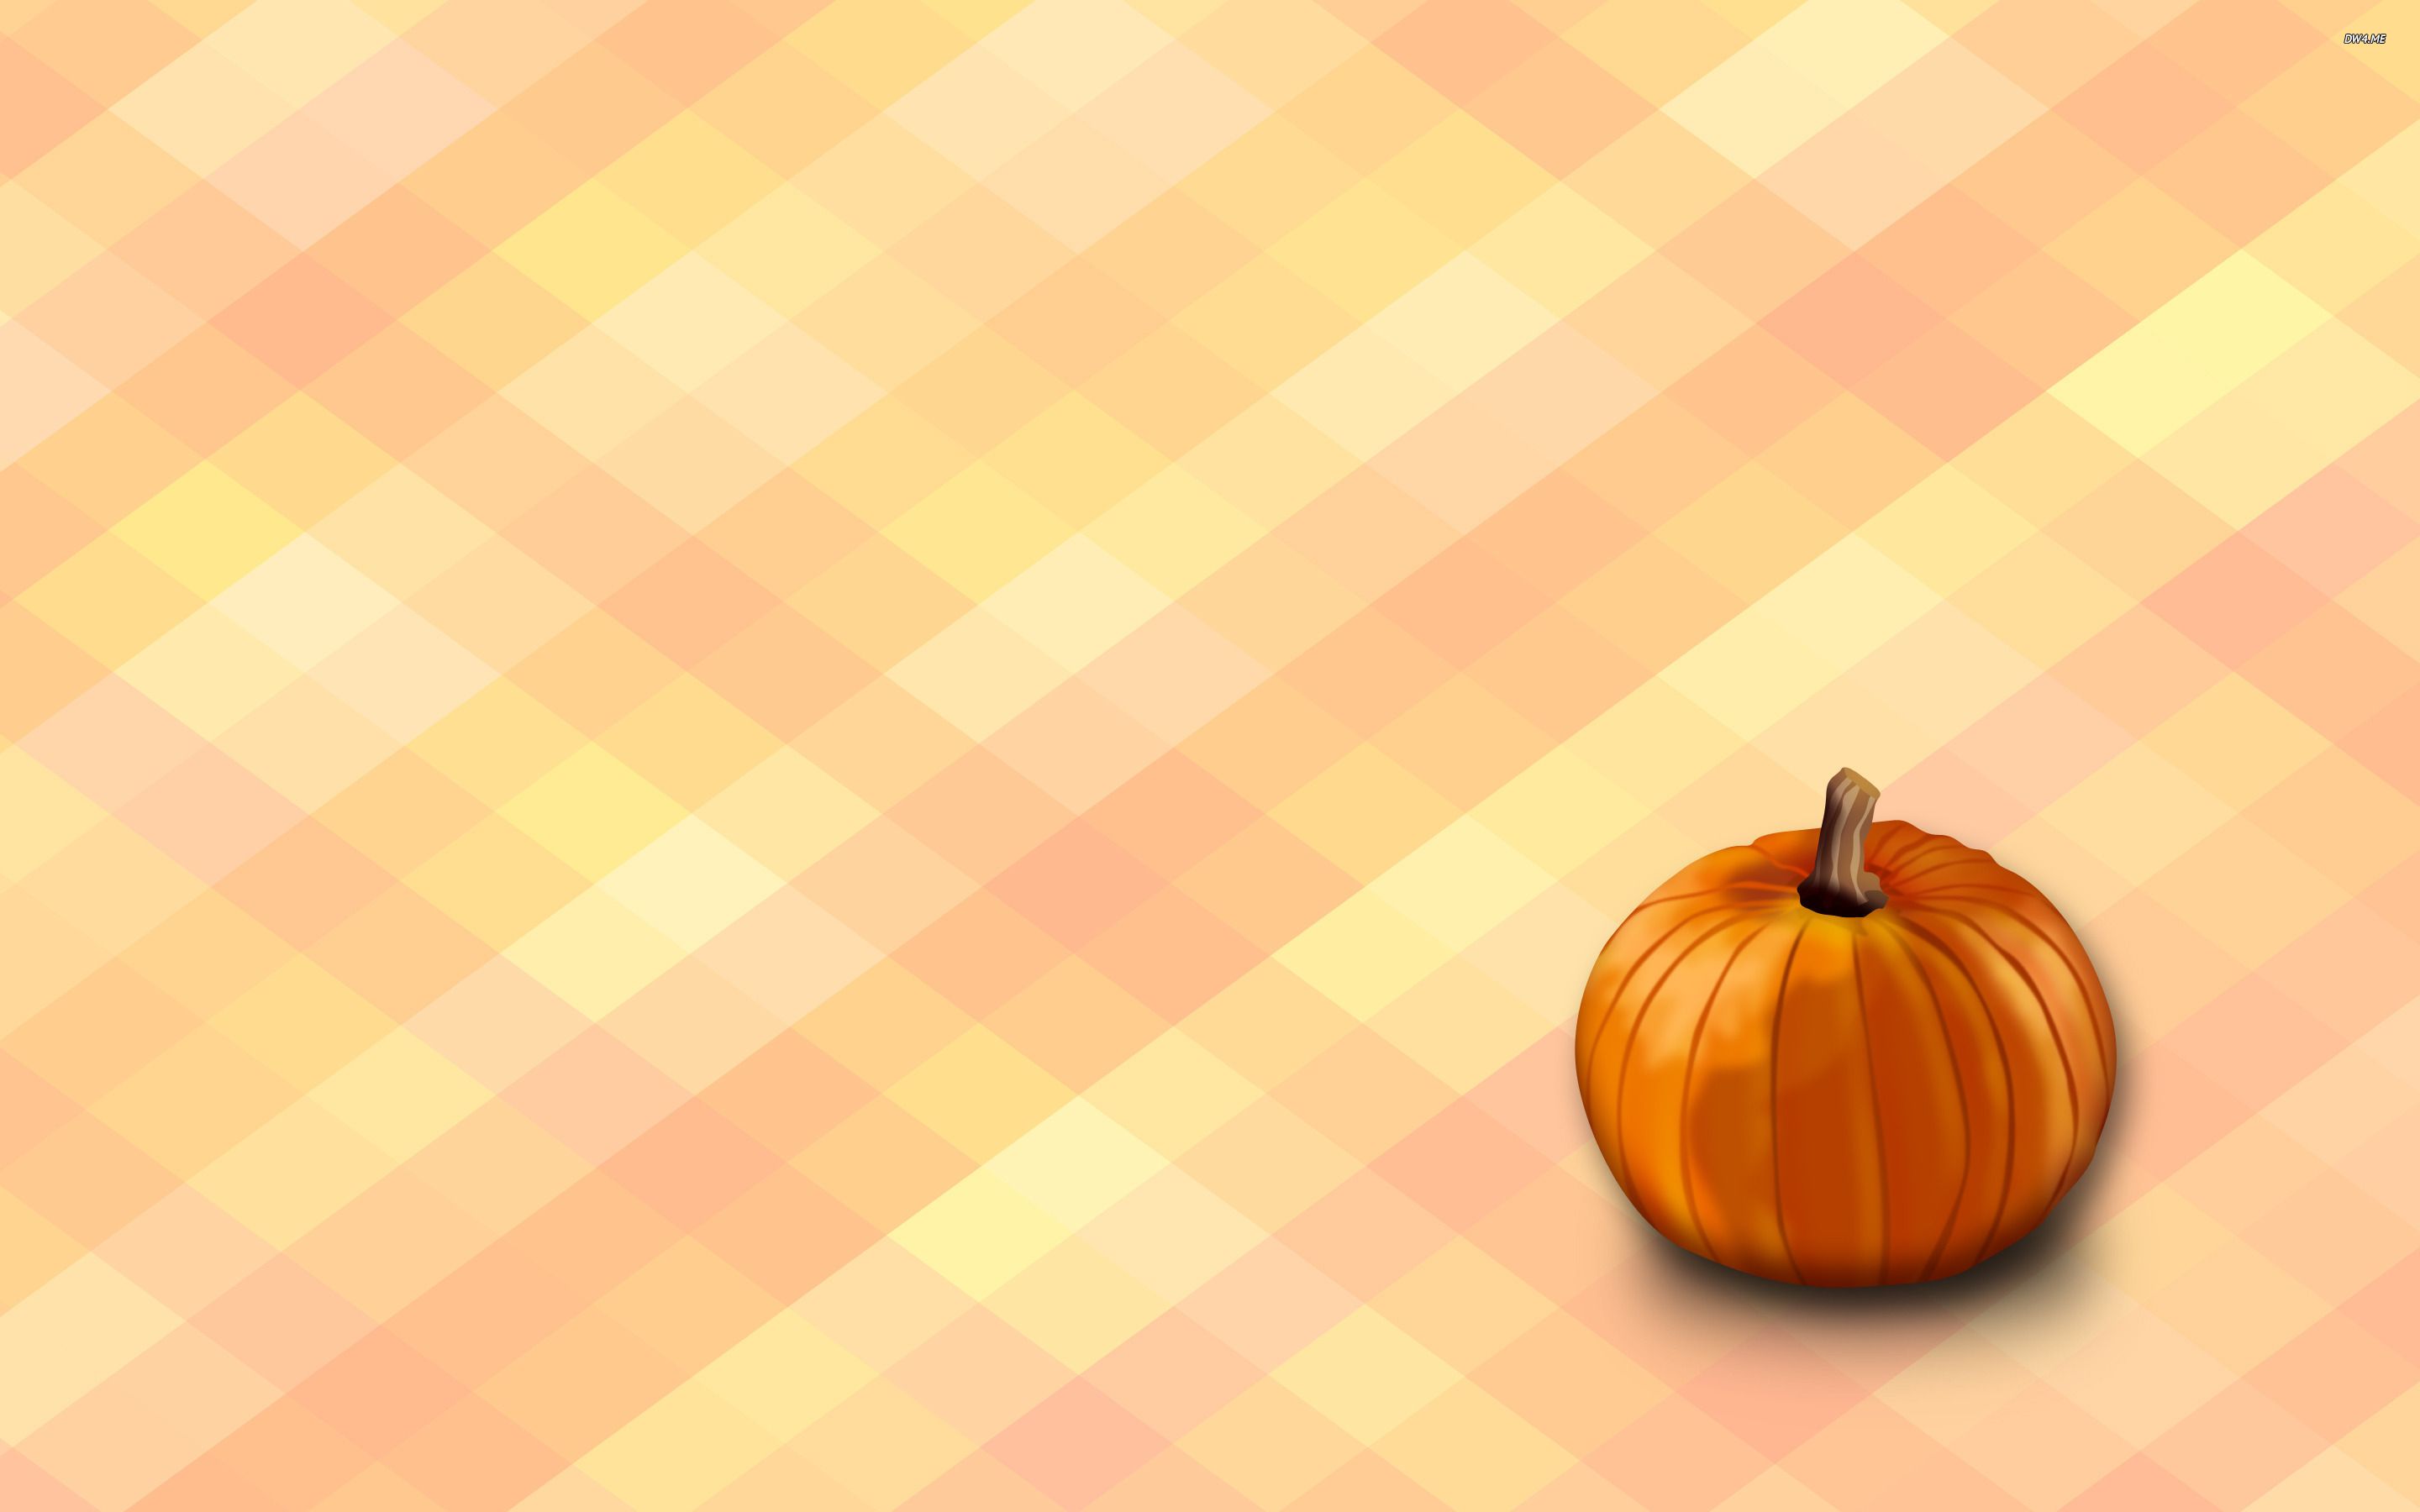 Free download Pumpkin wallpaper Digital Art wallpaper 1826 [2880x1800] for your Desktop, Mobile & Tablet. Explore Pumpkin Wallpaper. Free Pumpkin Wallpaper, Halloween Pumpkin Wallpaper, HD Pumpkin Wallpaper